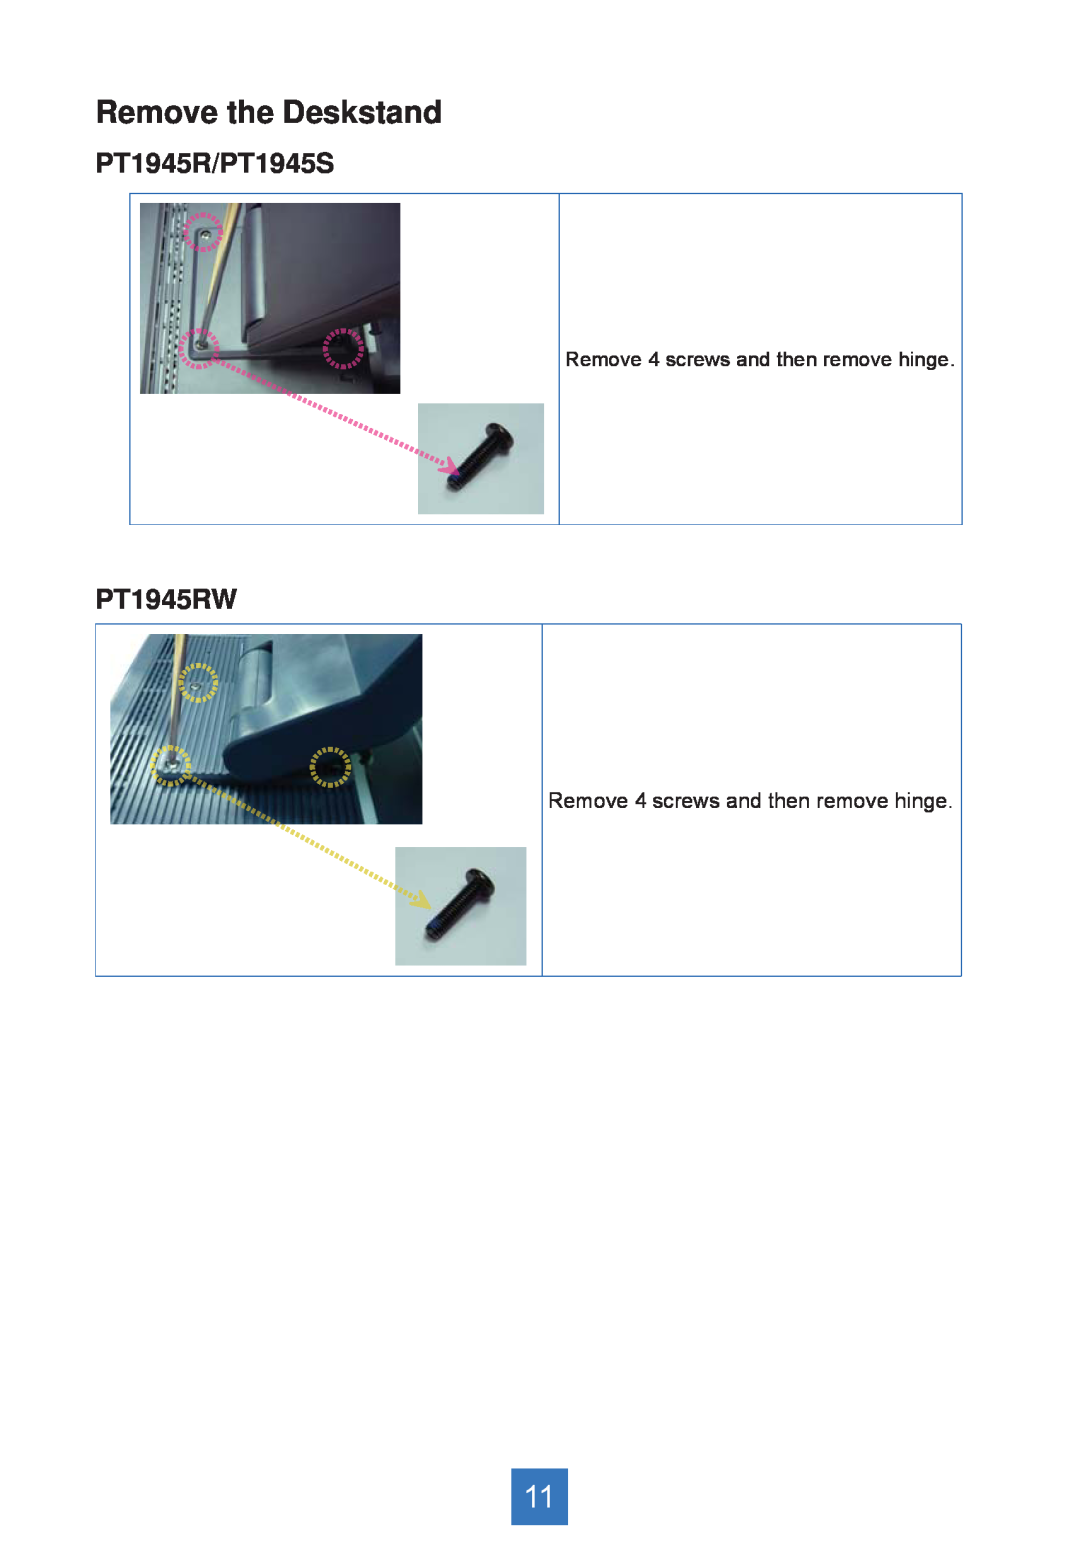 Planar PT1945RW manual Remove the Deskstand, PT1945R/PT1945S, Remove 4 screws and then remove hinge 